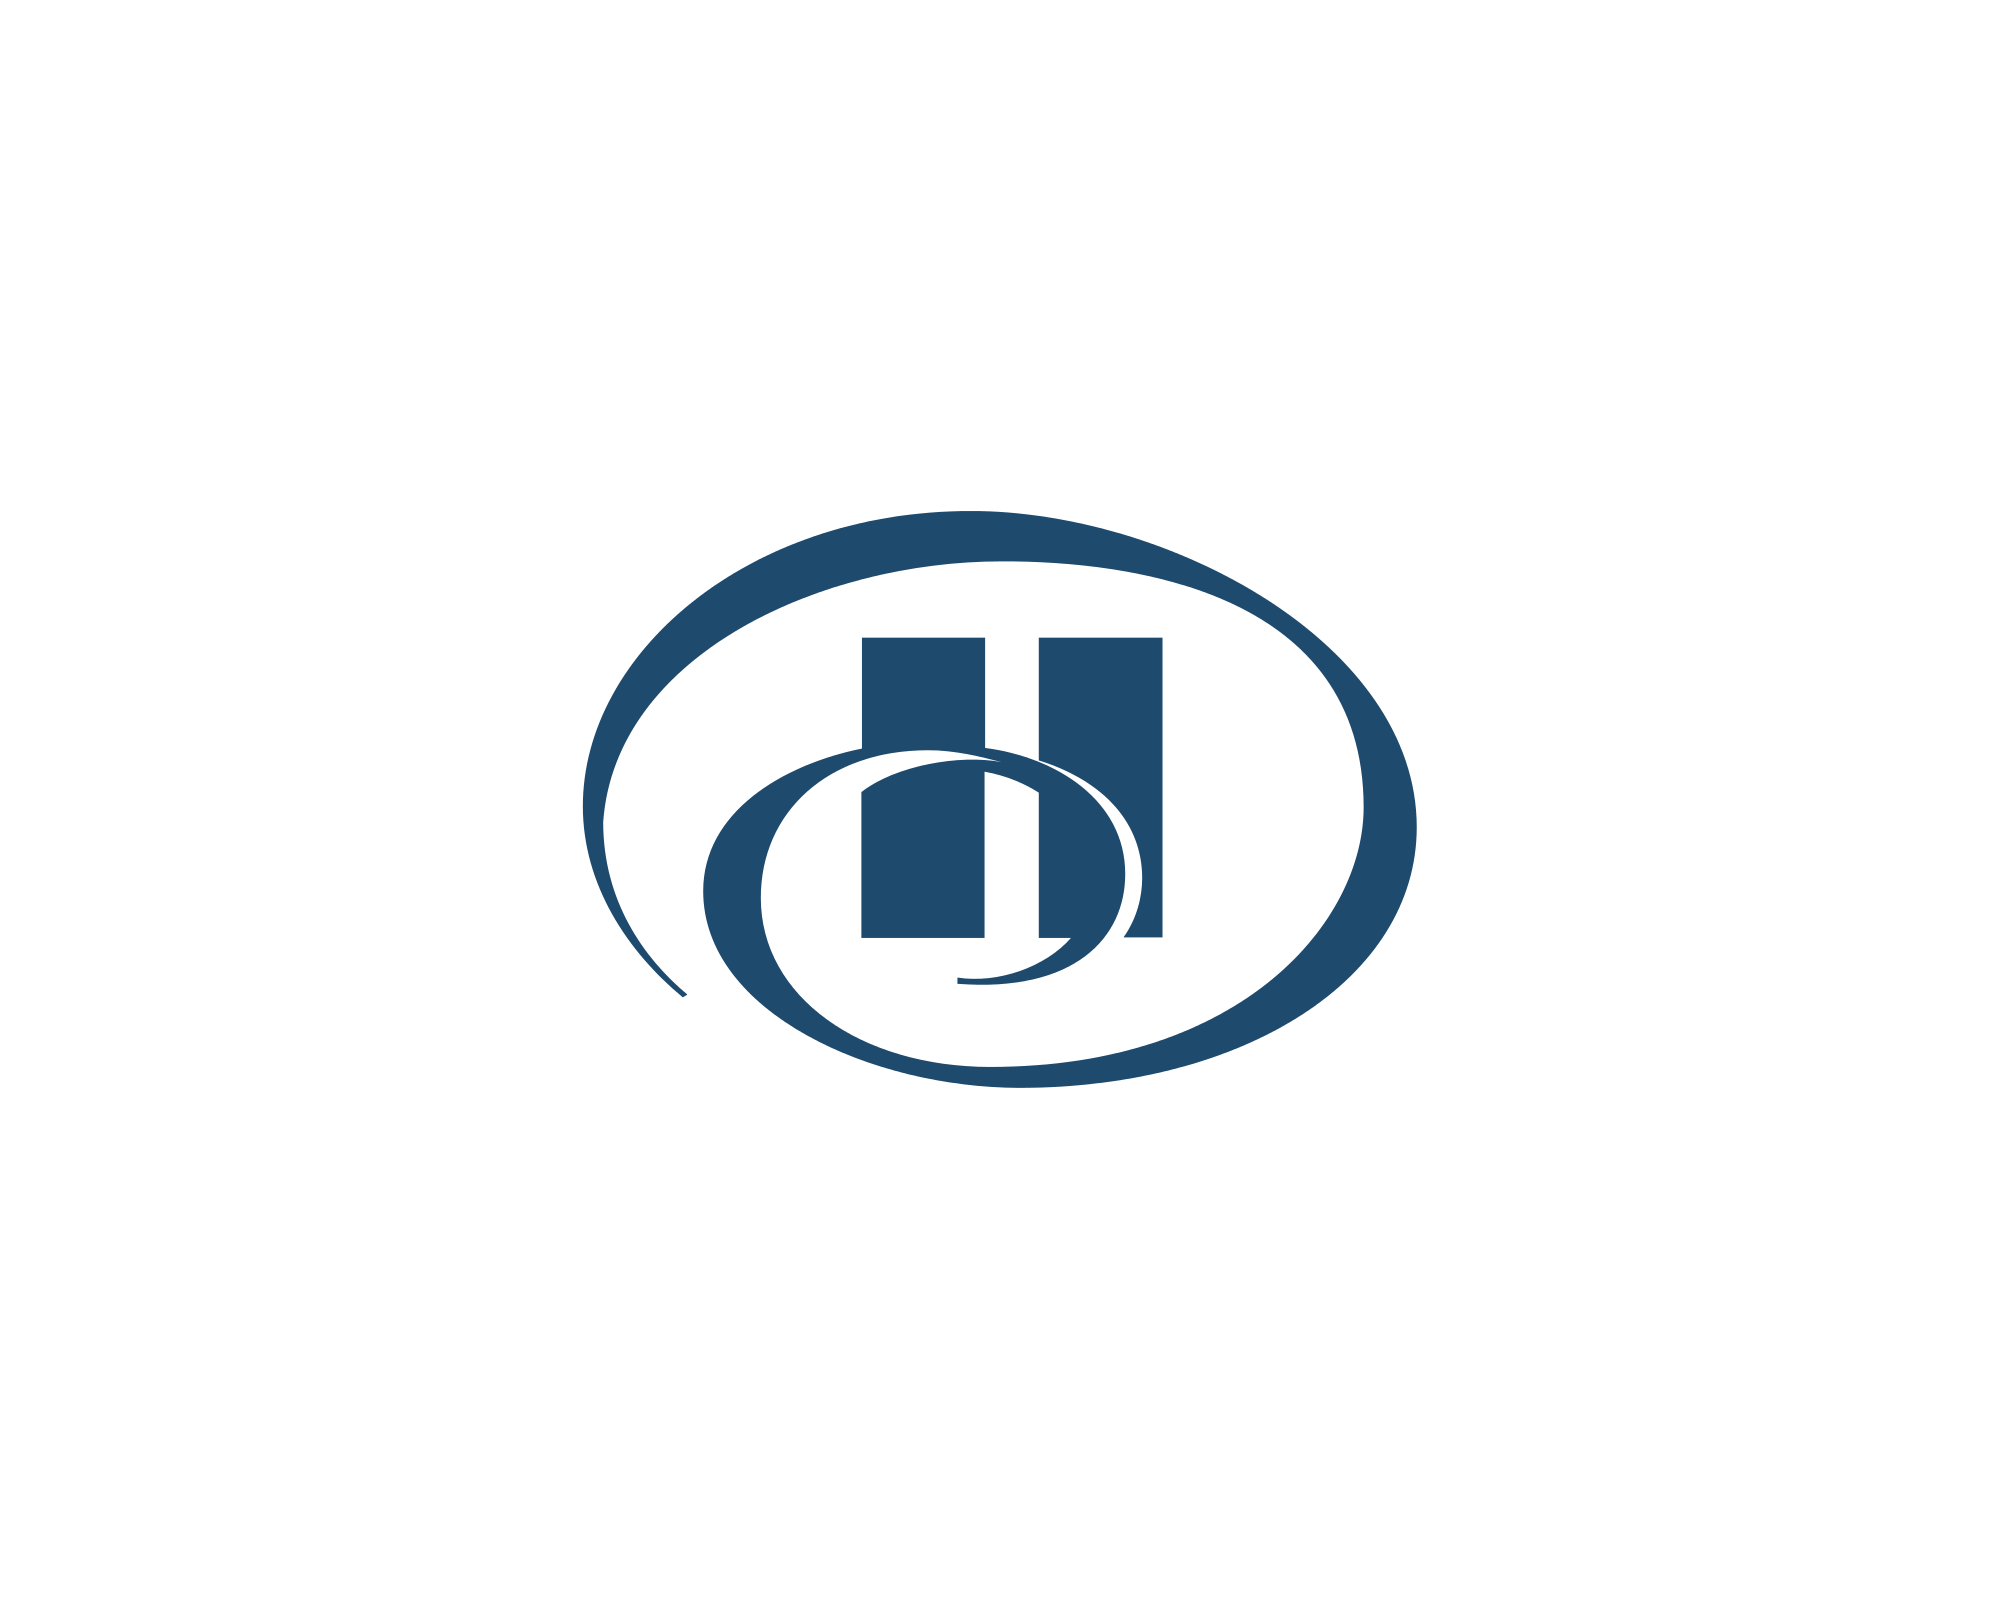 H Company Logo - H Logo Png Image